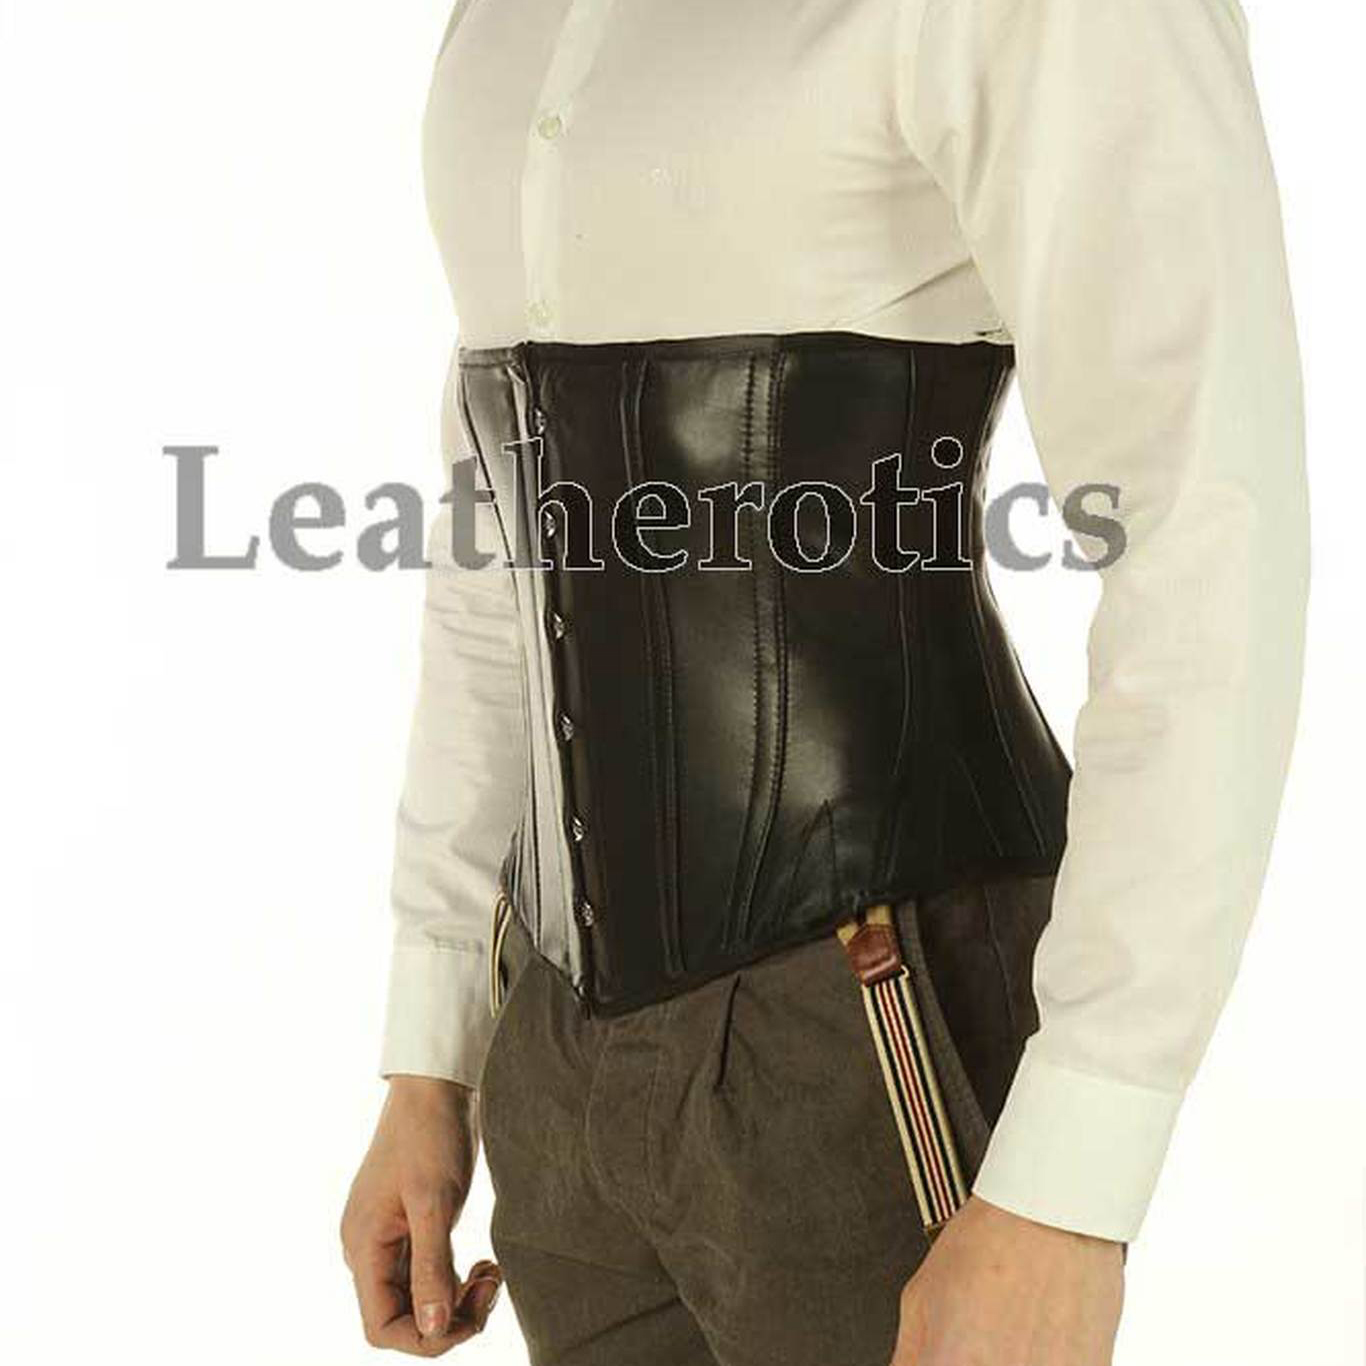 Men's leather corset